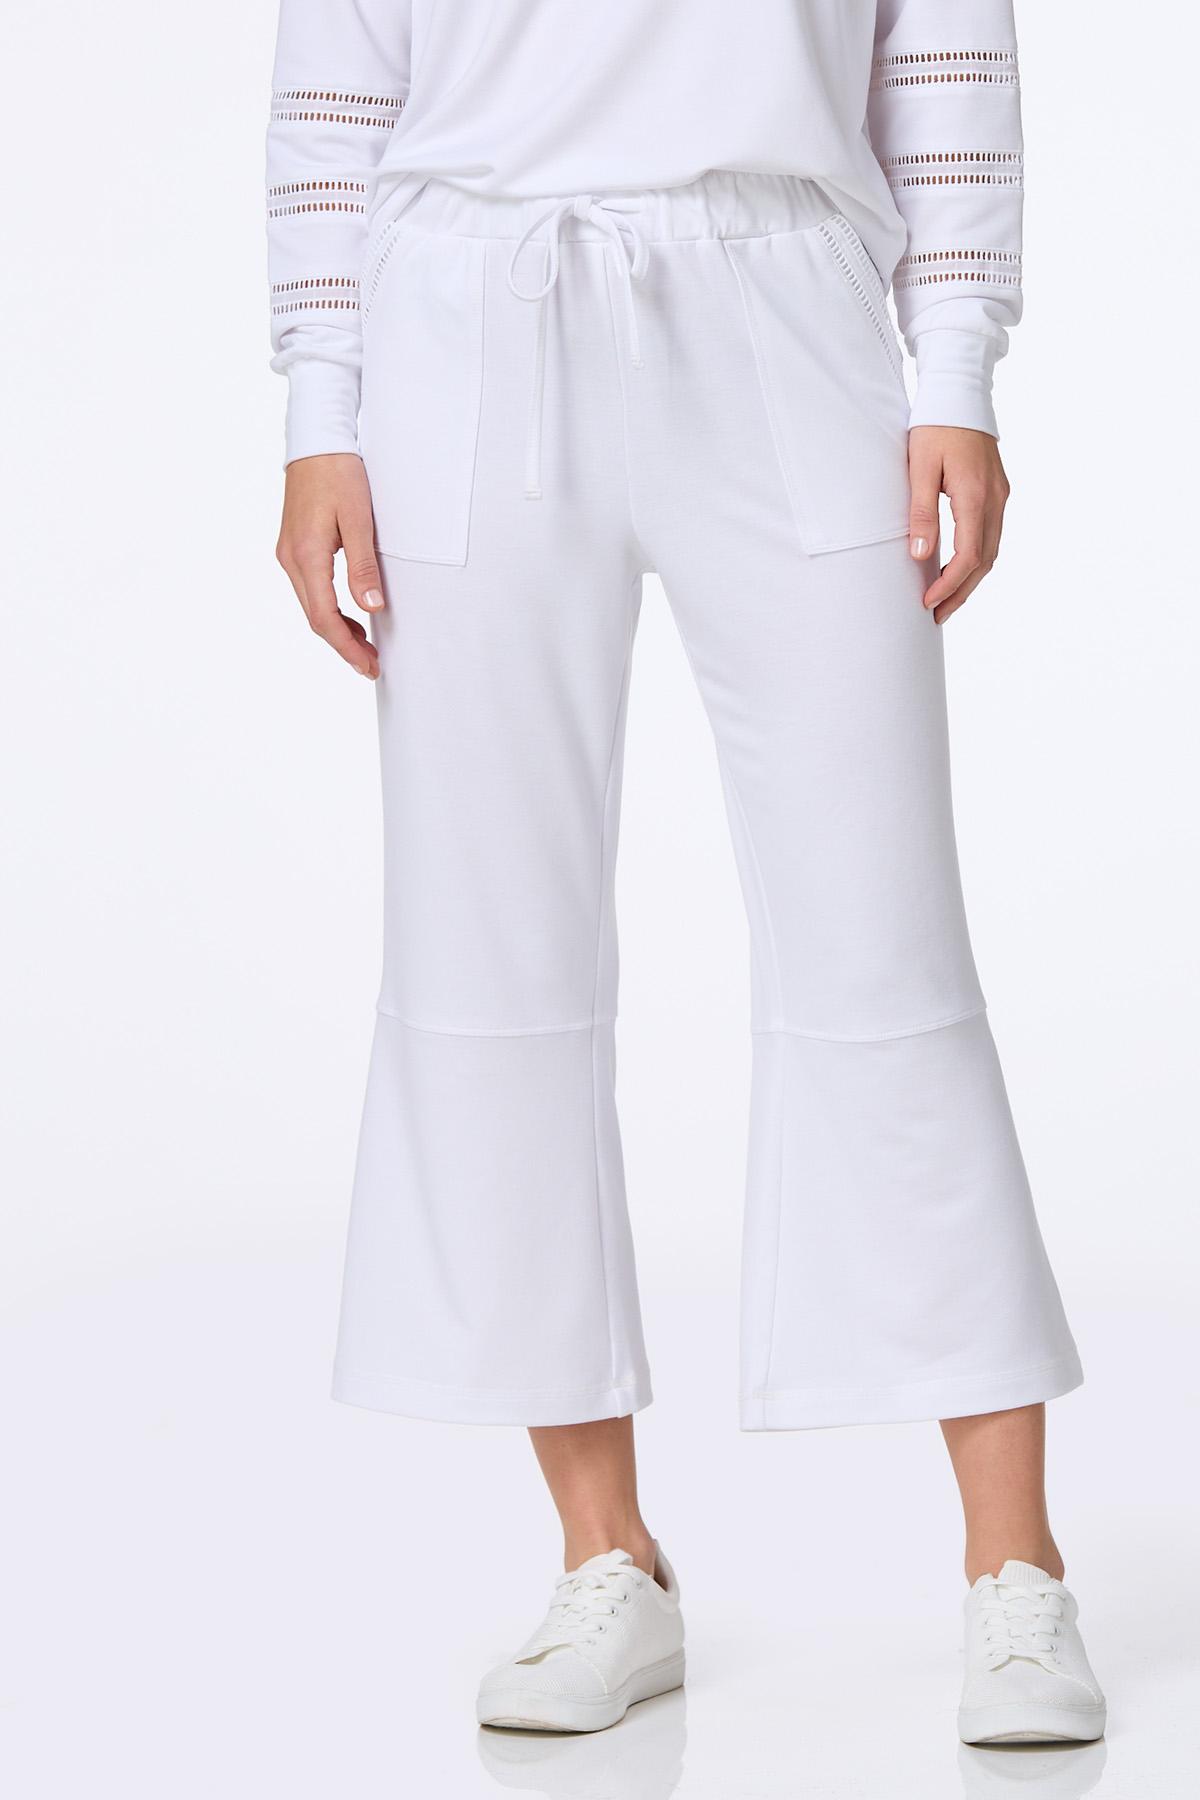 Capreze Dress Pants for Women High Waist Office Work Pant with Pockets  Casual Straight Leg Slacks Business Trousers Light Gray M